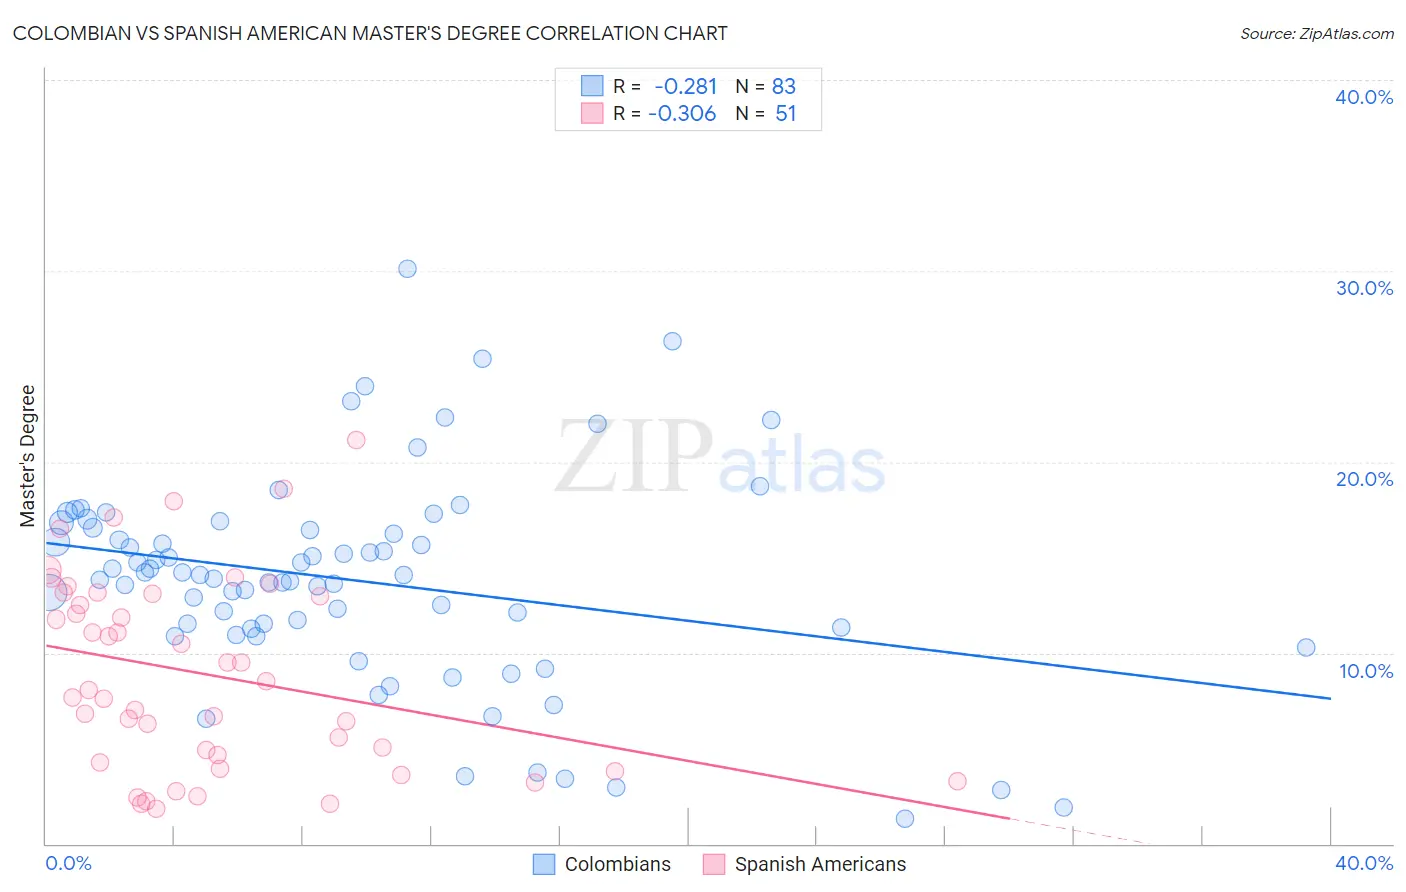 Colombian vs Spanish American Master's Degree